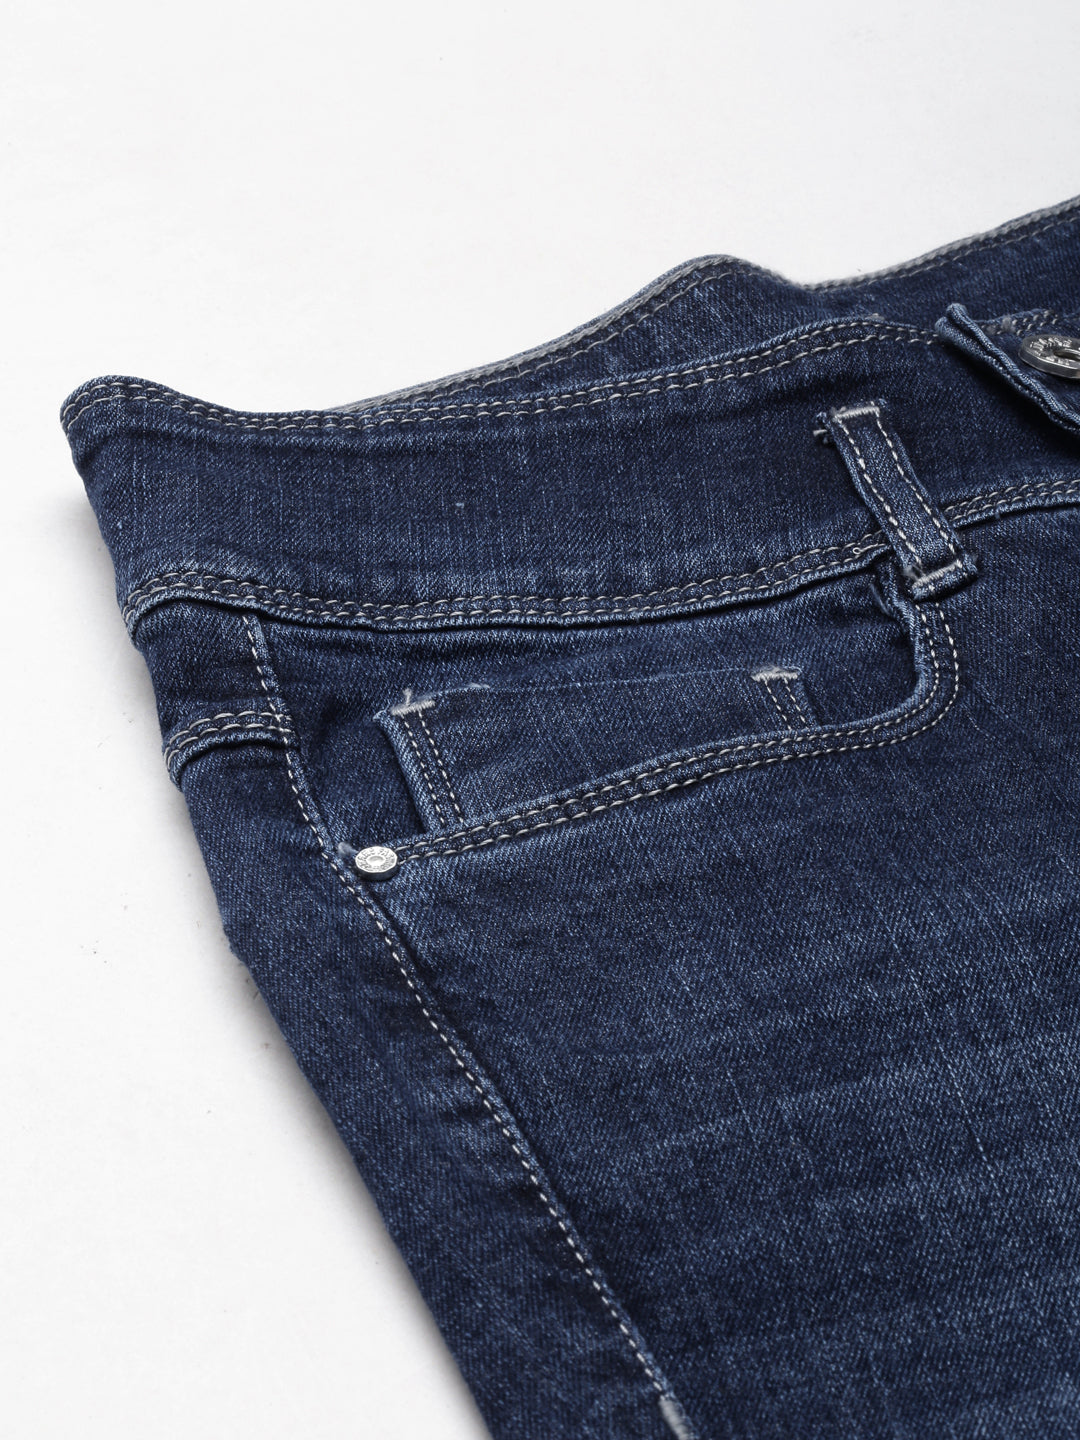 Women Navy Blue Solid Flared Denim Jeans